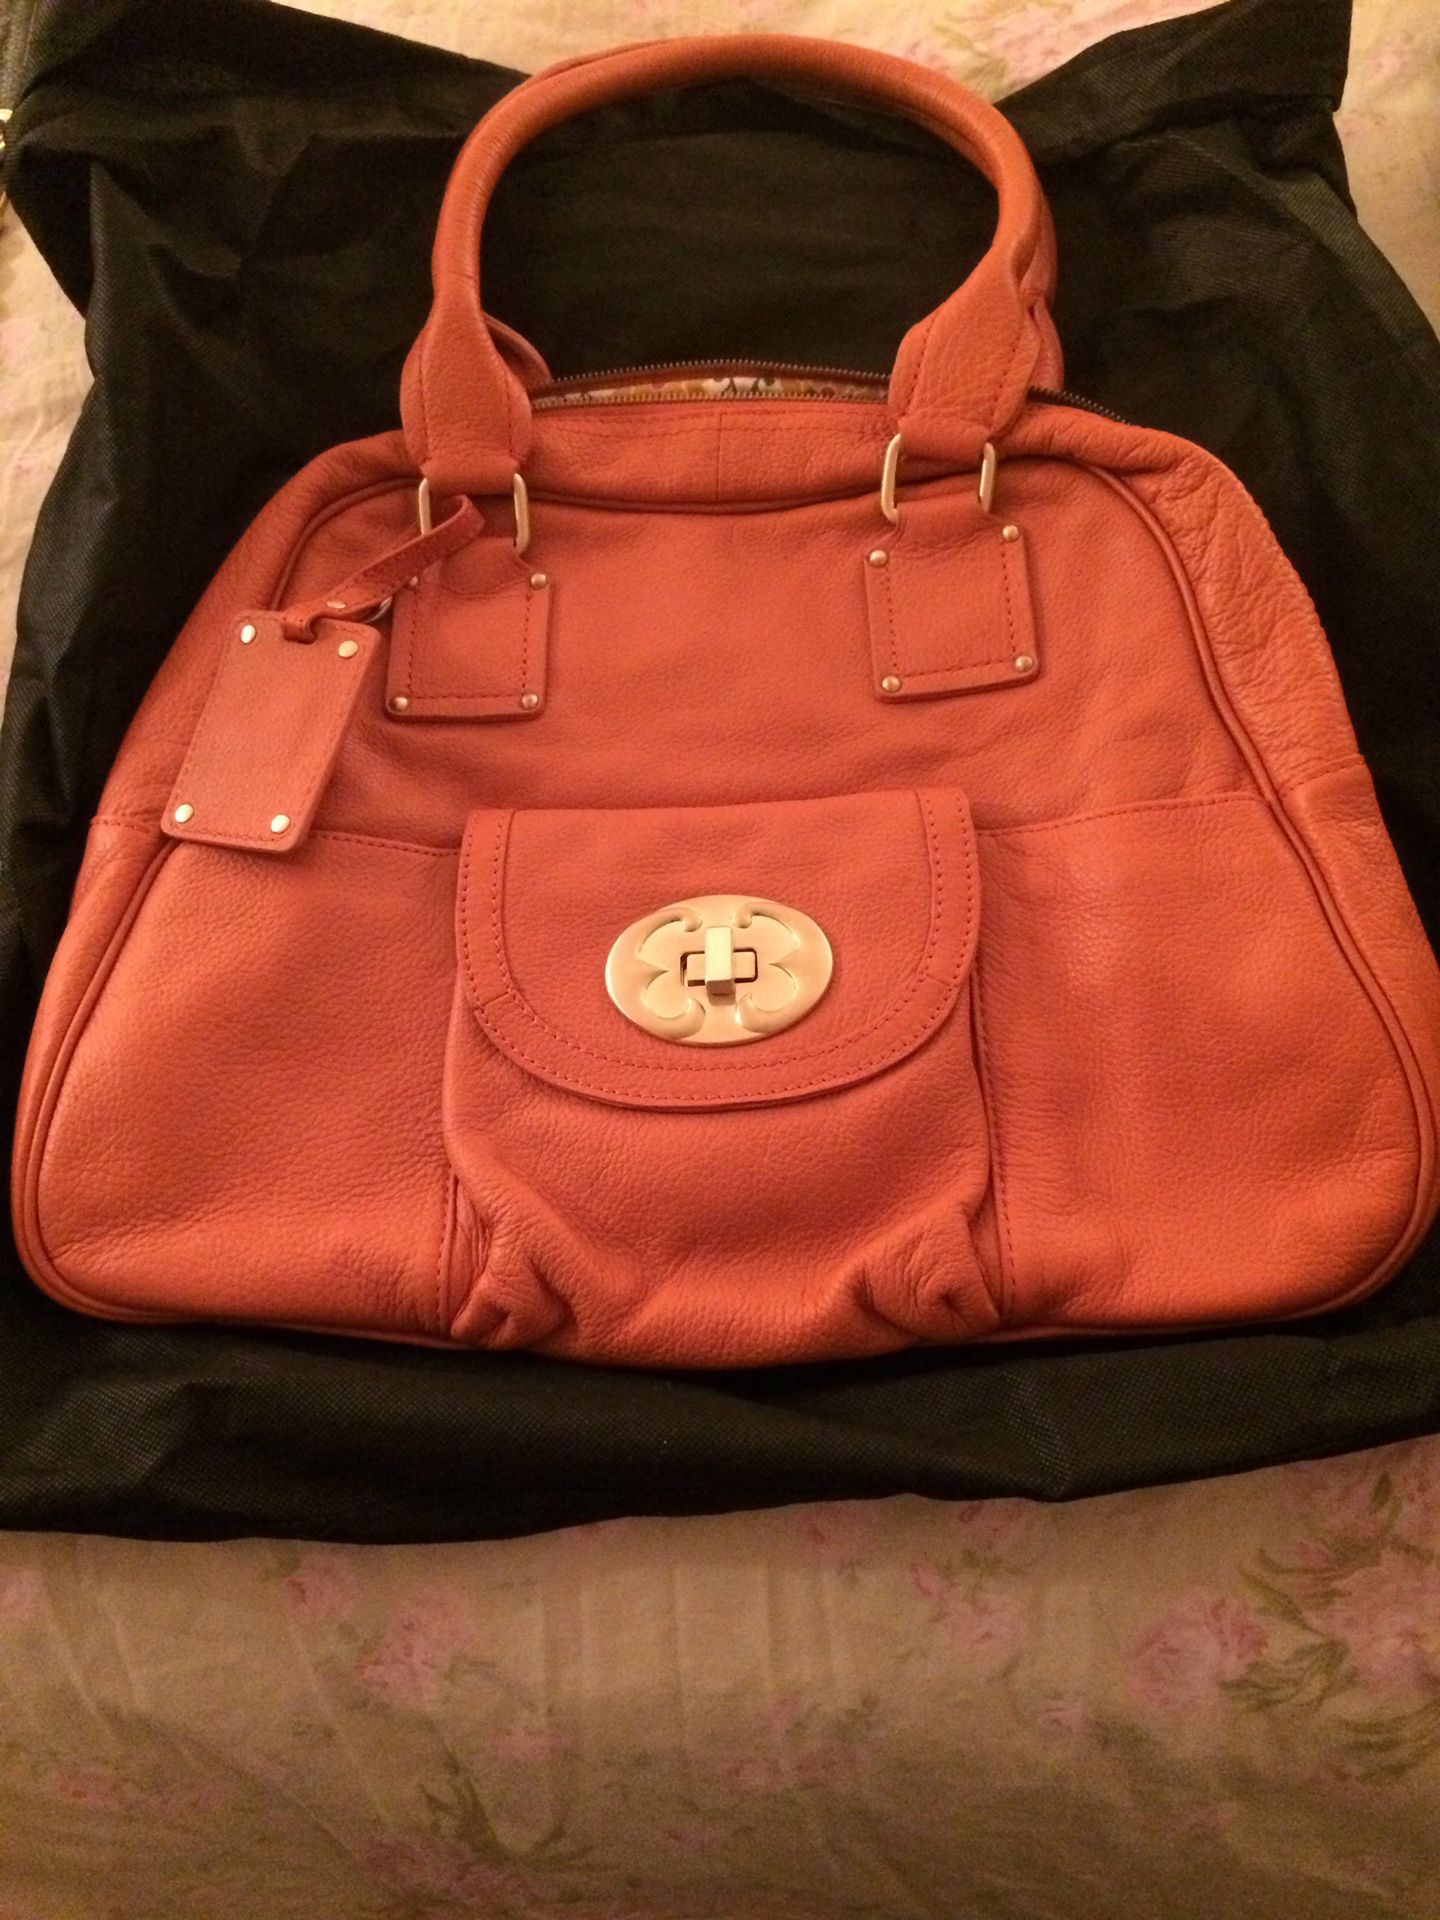 Authentic Italian Leather handbag/purse